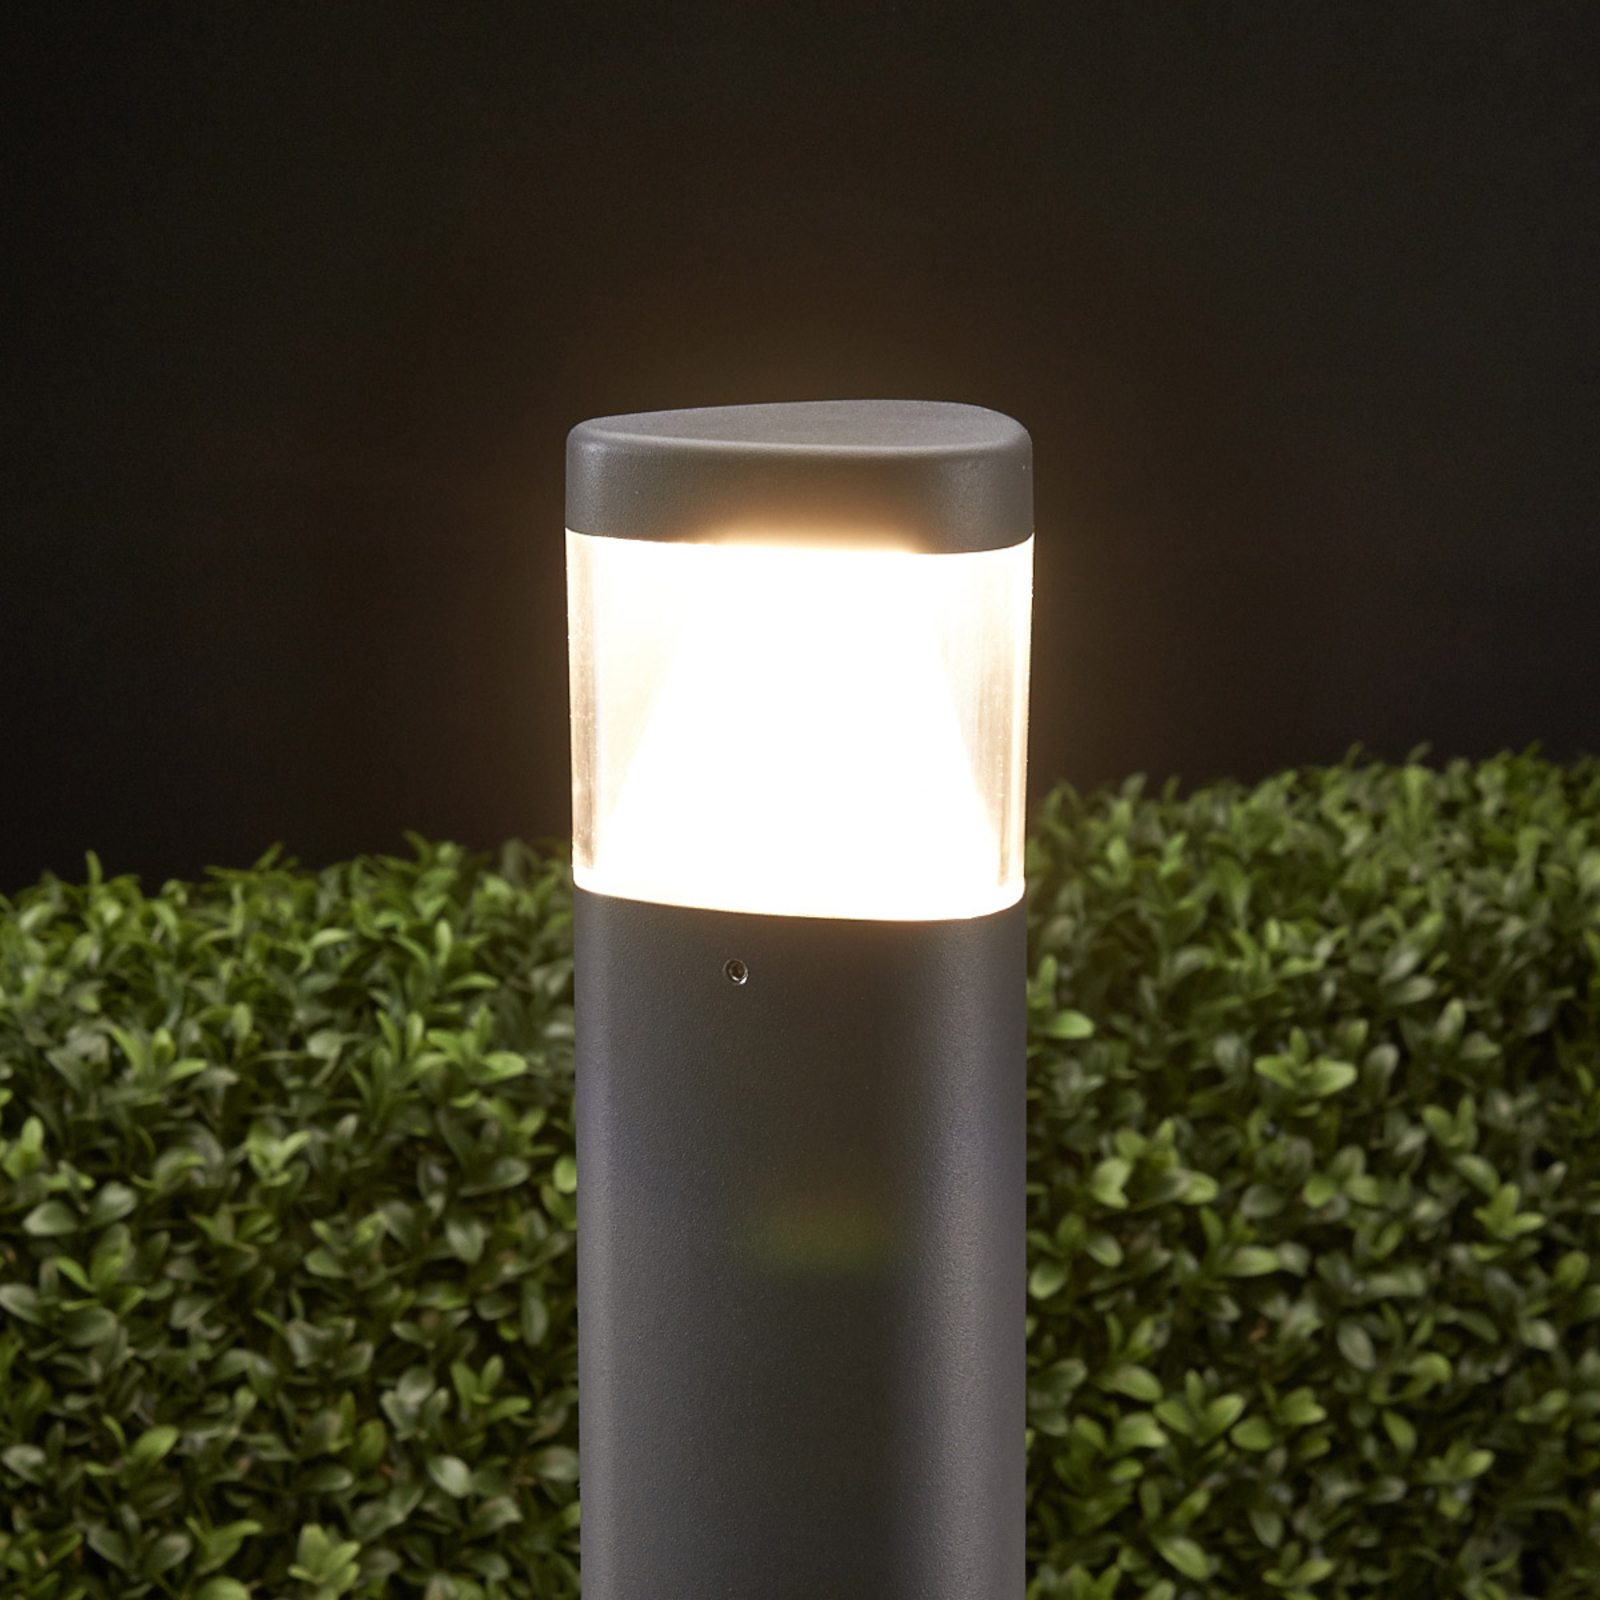 LED-pollerlamp Milou van aluminium